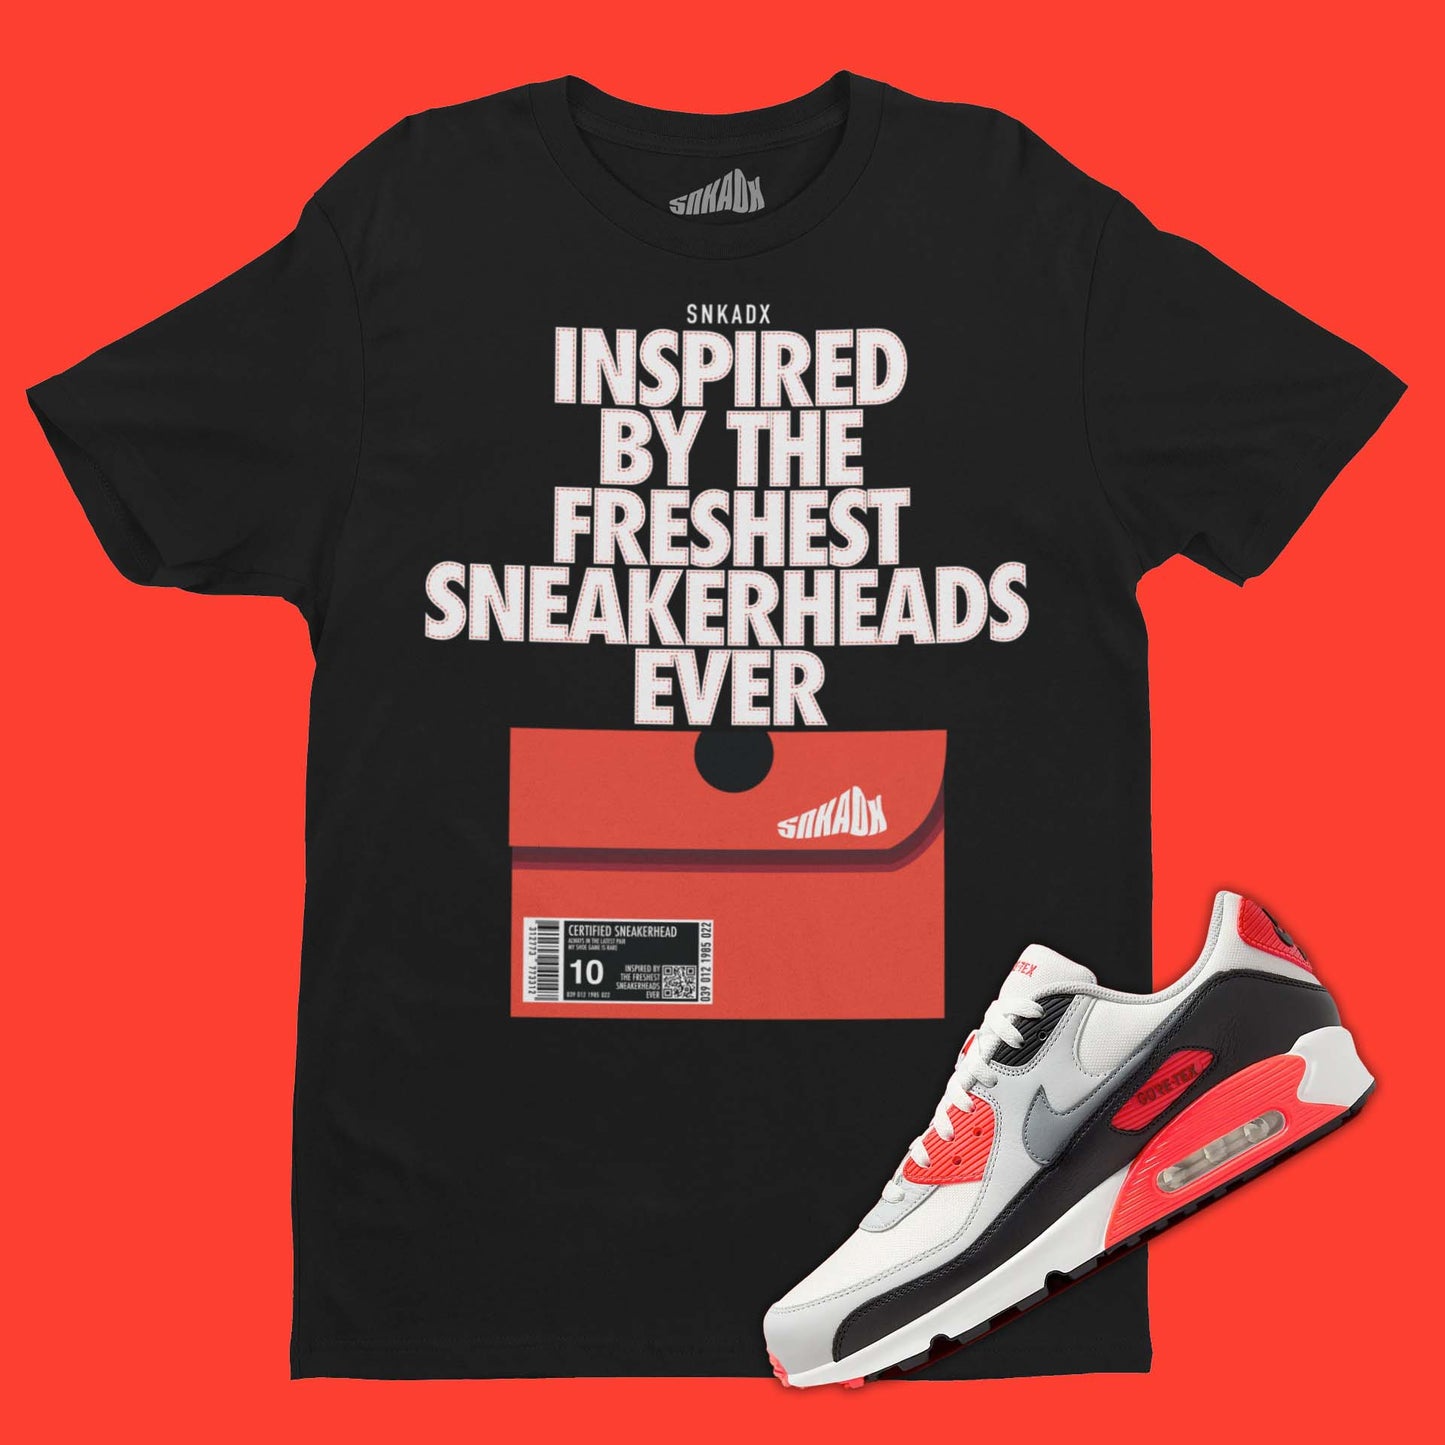 Shoe Box T-Shirt Matching Air Max 90 Infrared